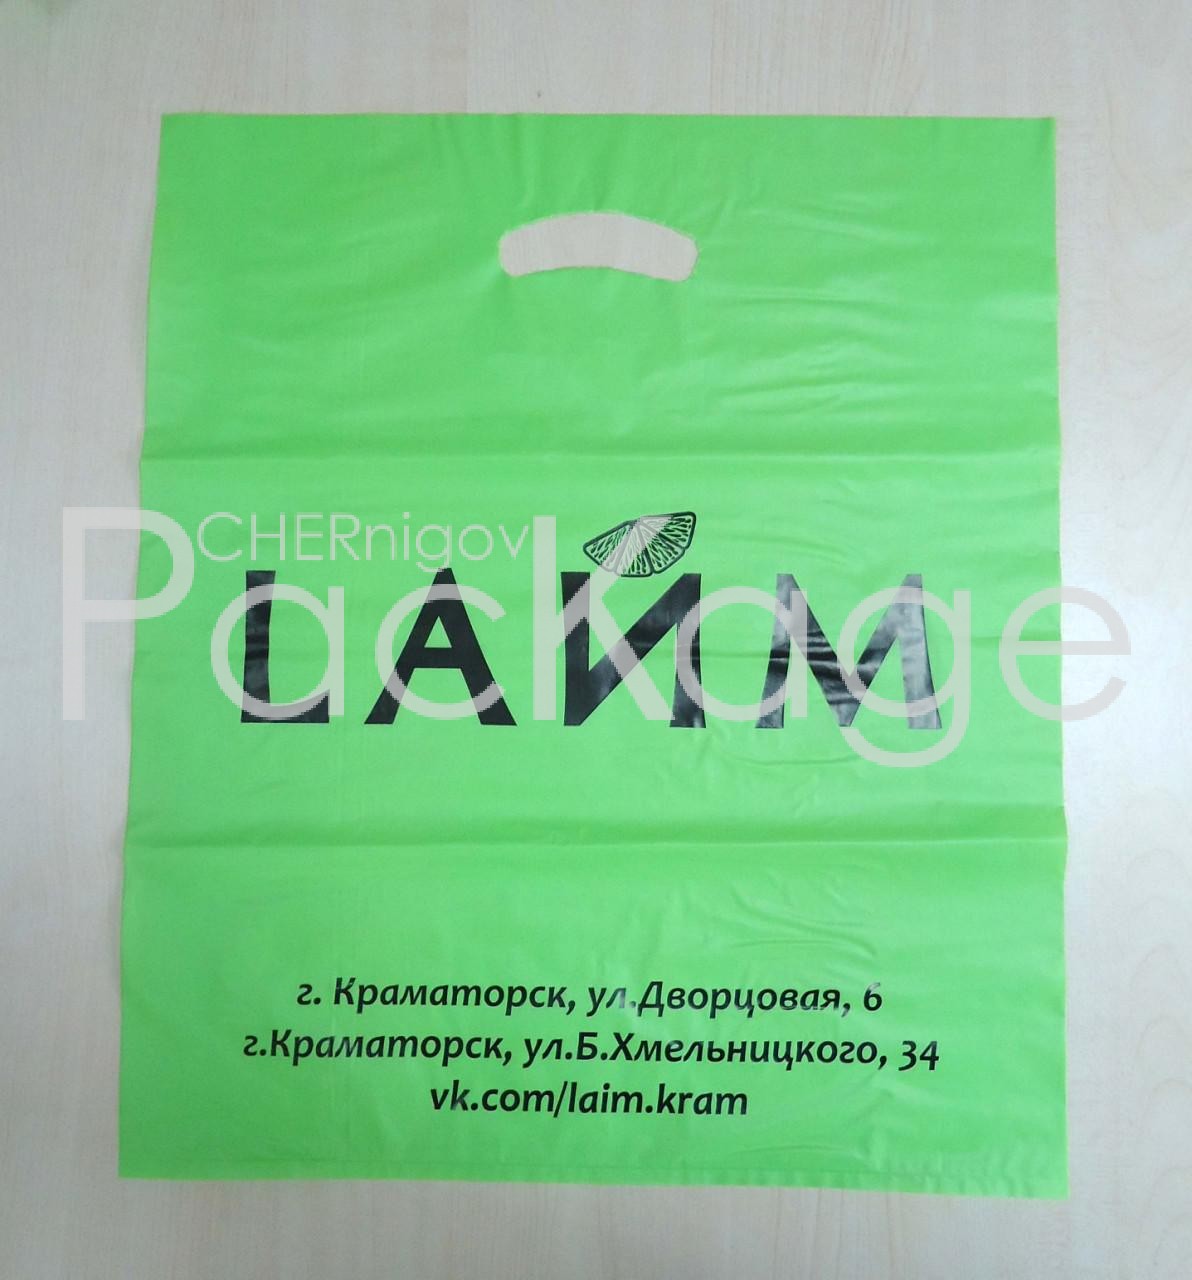 Пакеты с логотипом для продажи чая Chernigov Package - Photo бнн 40х48_50 мкм